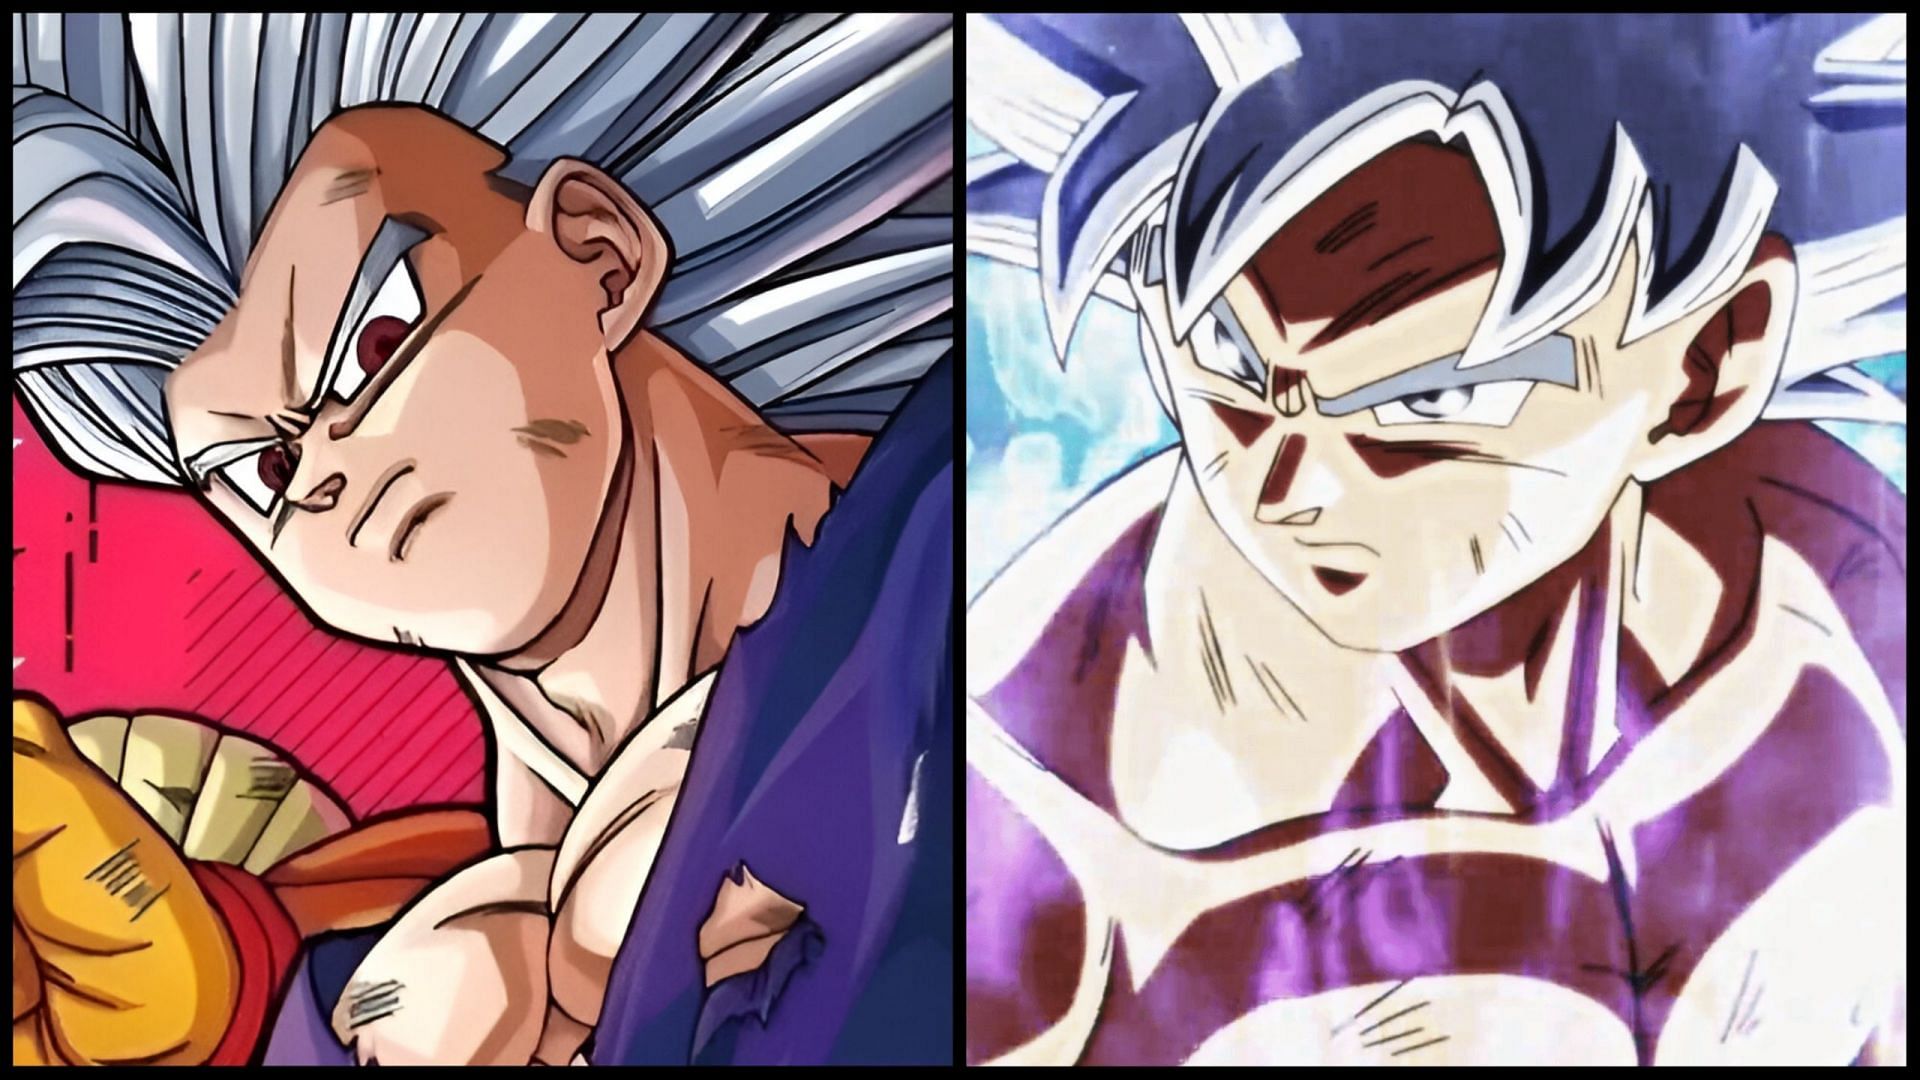 Dragon Ball Super chapter 103 first preview shows Goku vs Gohan